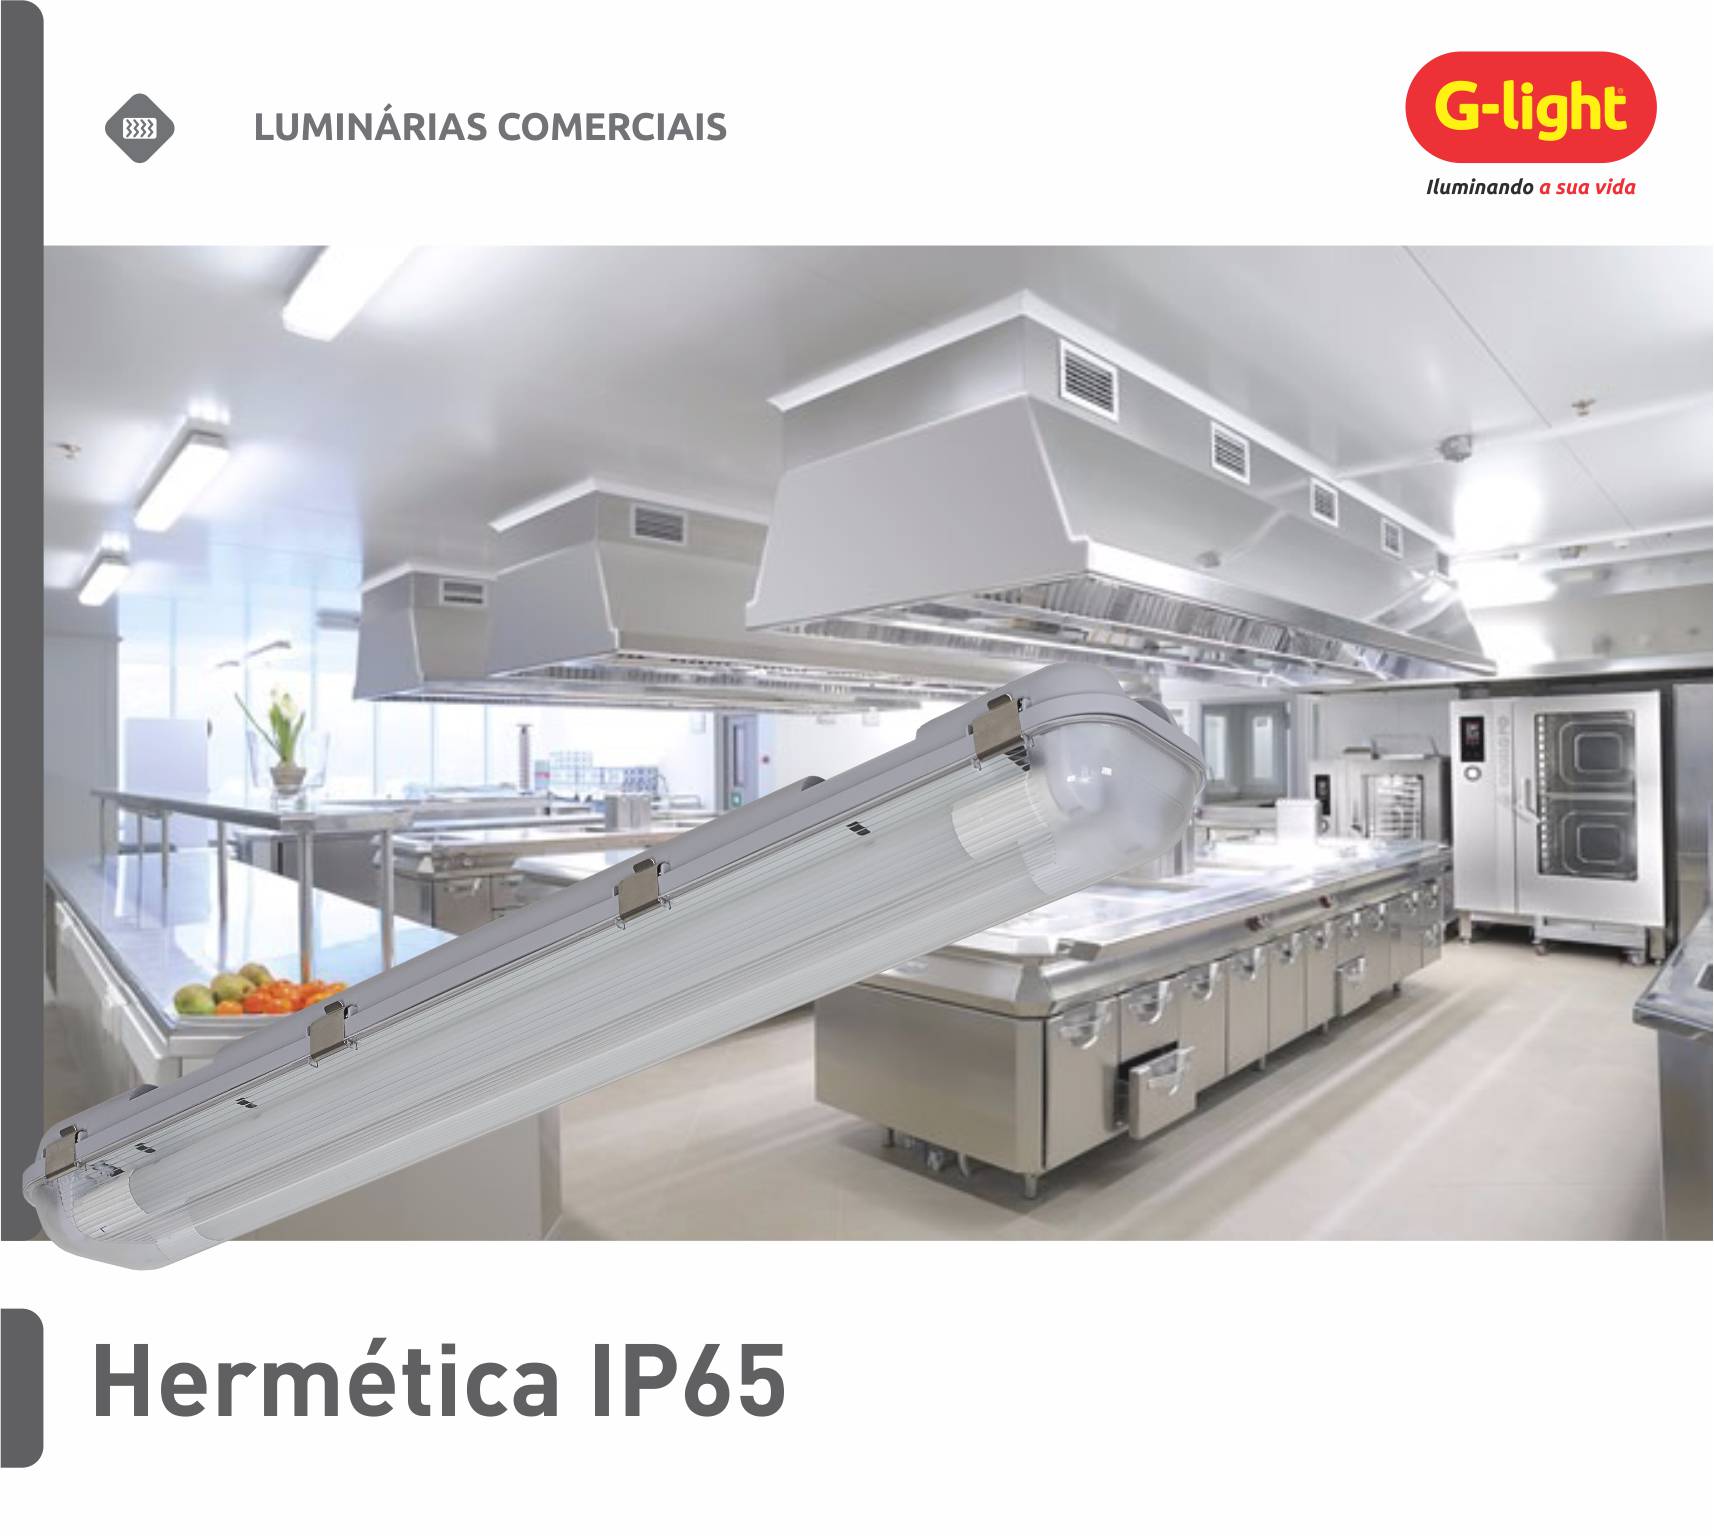 Luminária Hermética IP65